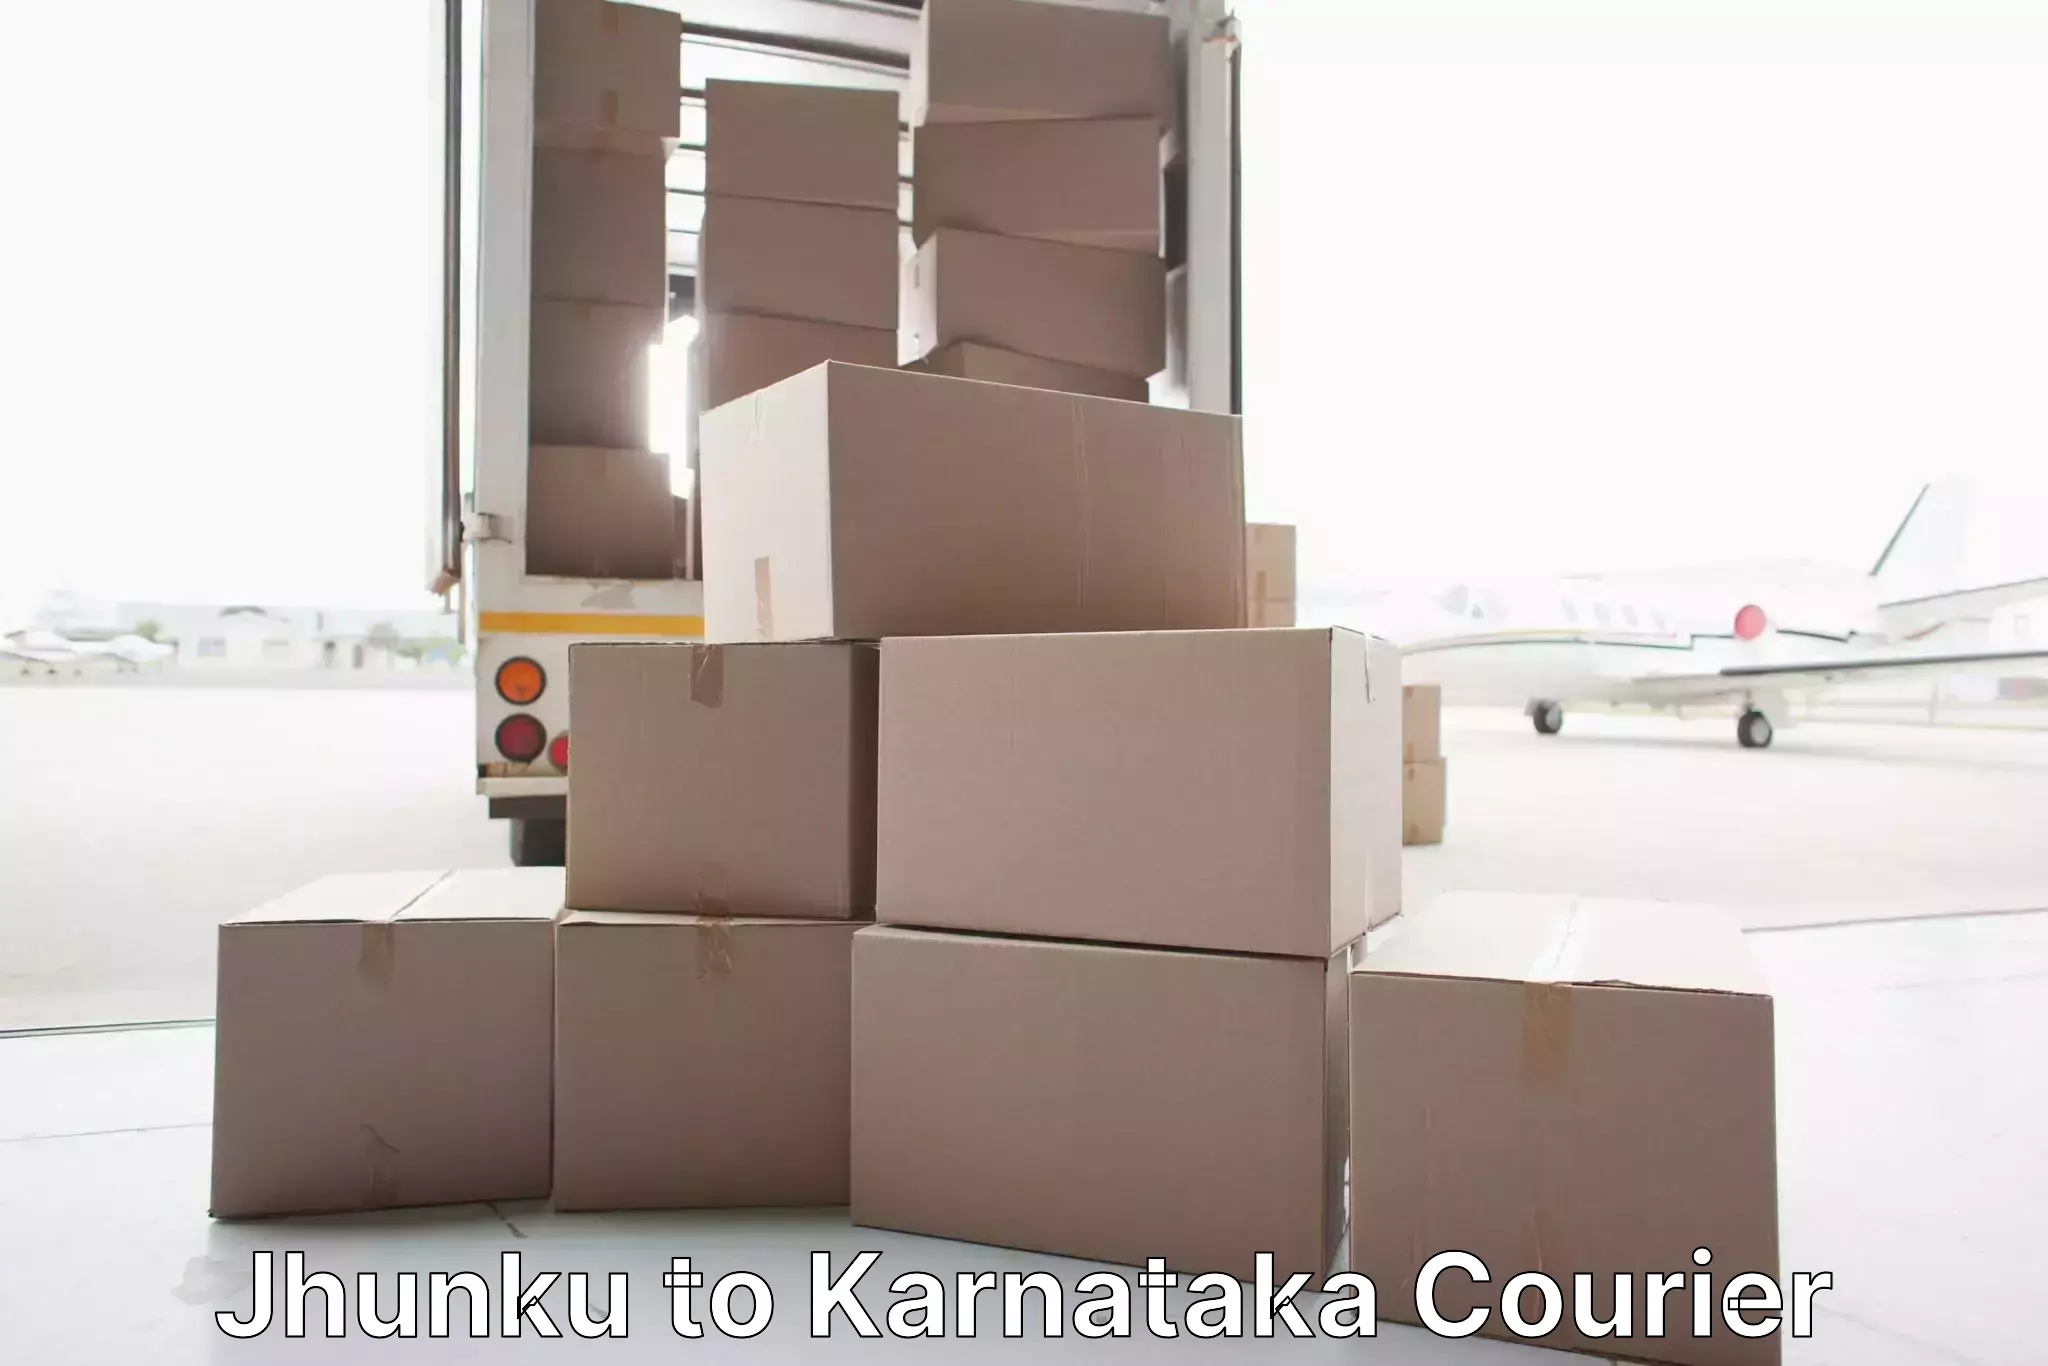 Trusted moving company Jhunku to Nelamangala